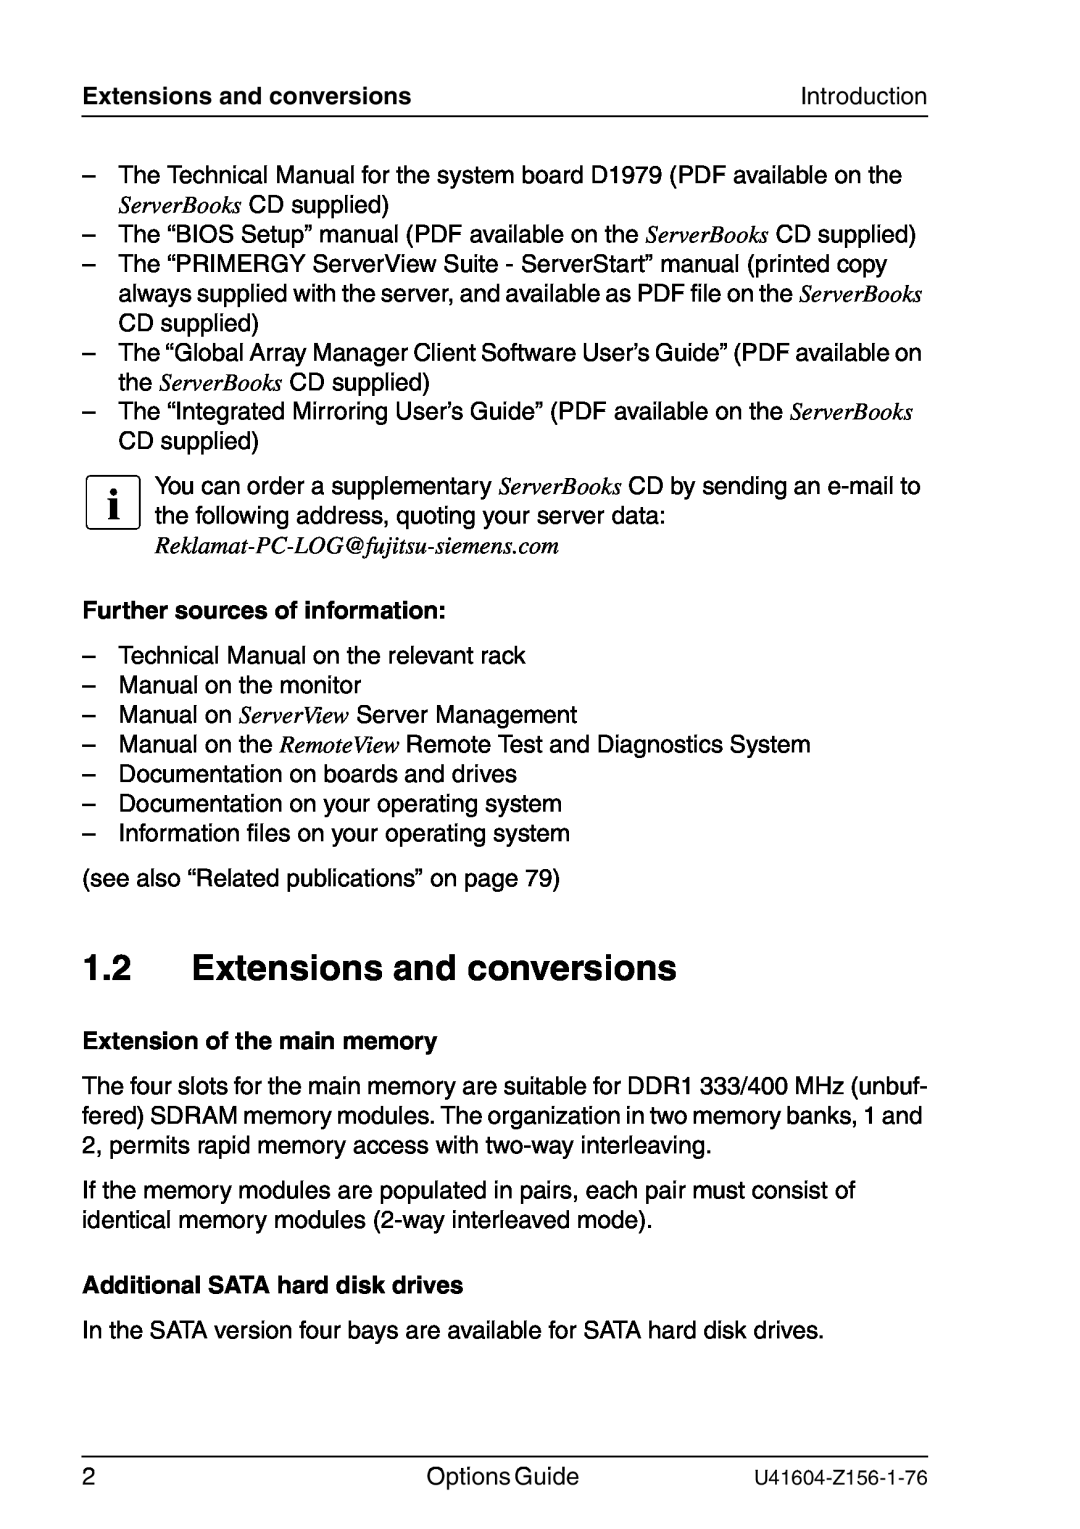 Fujitsu TX150 S3 manual Extensions and conversions, Reklamat-PC-LOG@fujitsu-siemens.com, Further sources of information 